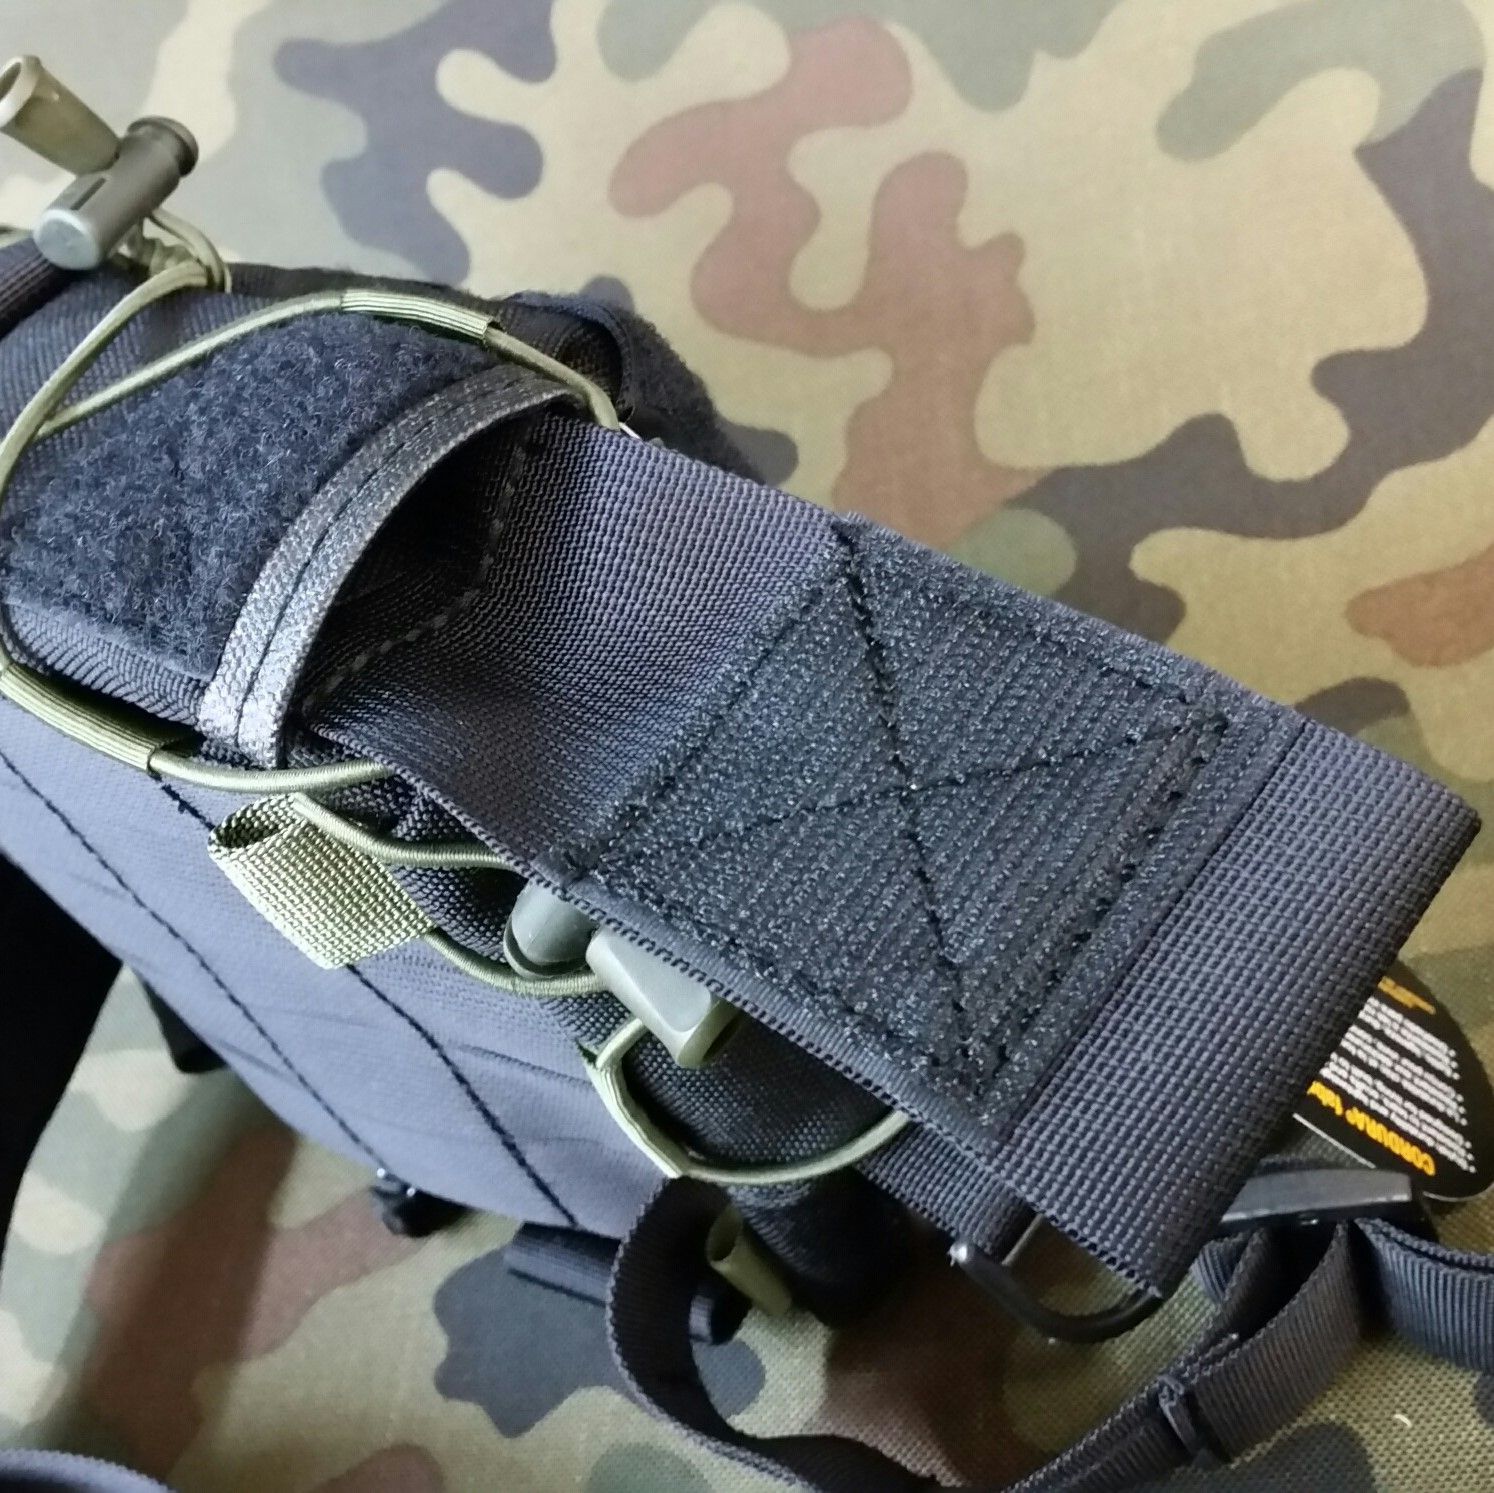 Expandable baton low profile pouch +25pln